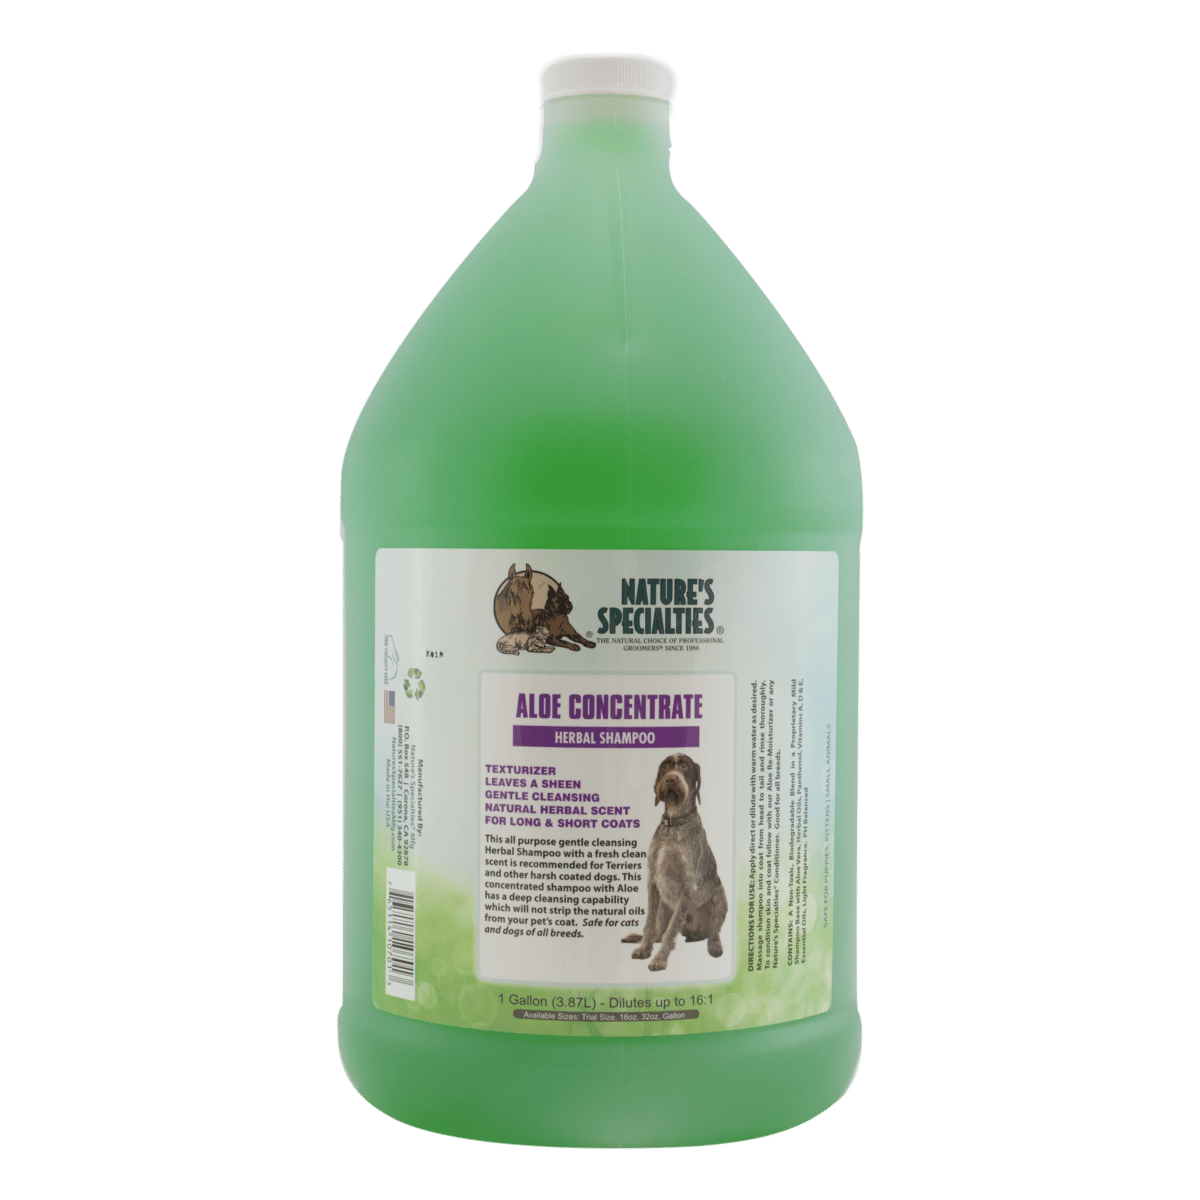 natures specialties Aloe concentrate gallon shampoo